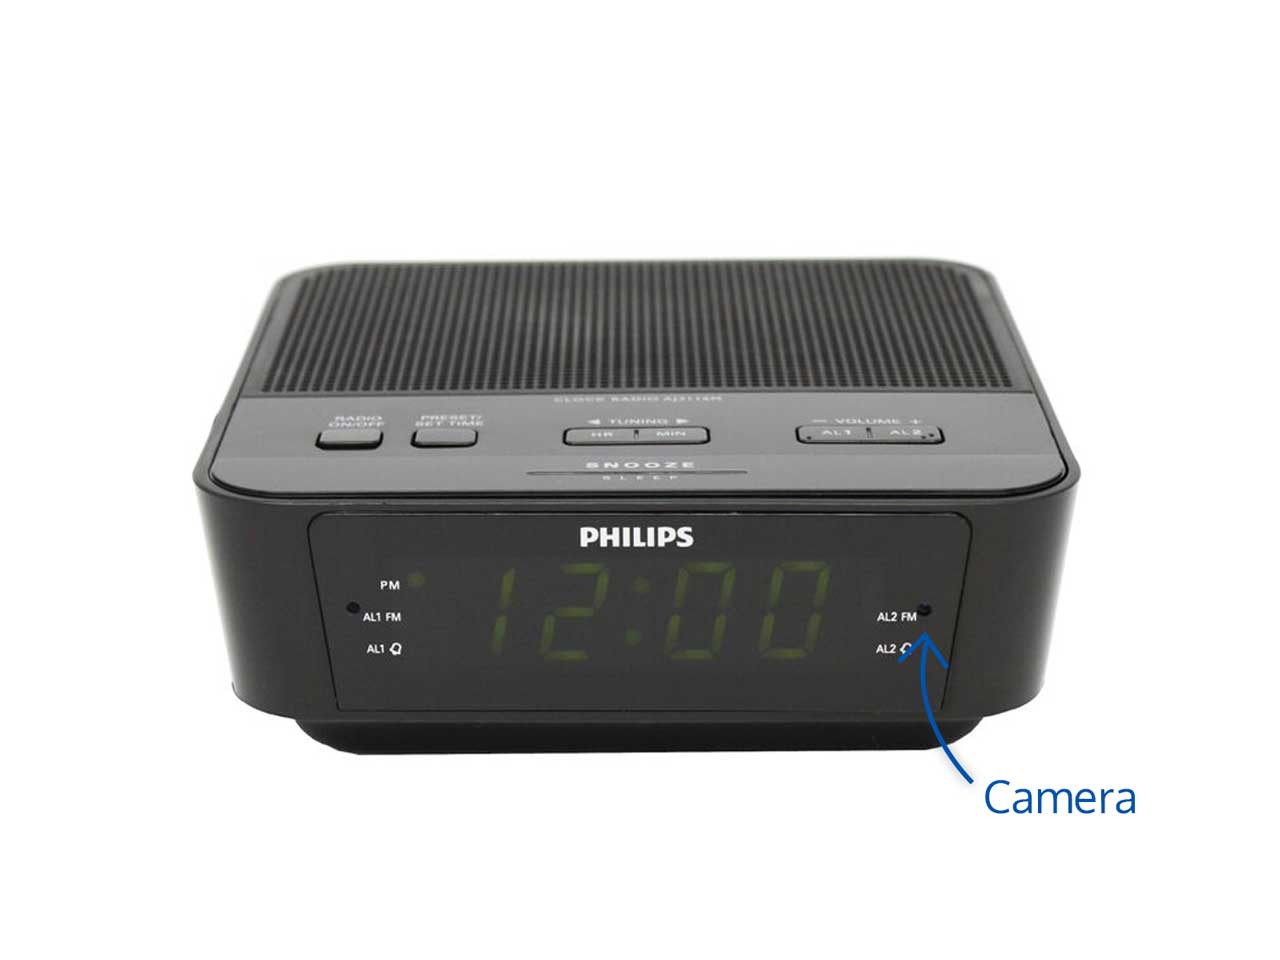 philips alarm clock radio spy camera